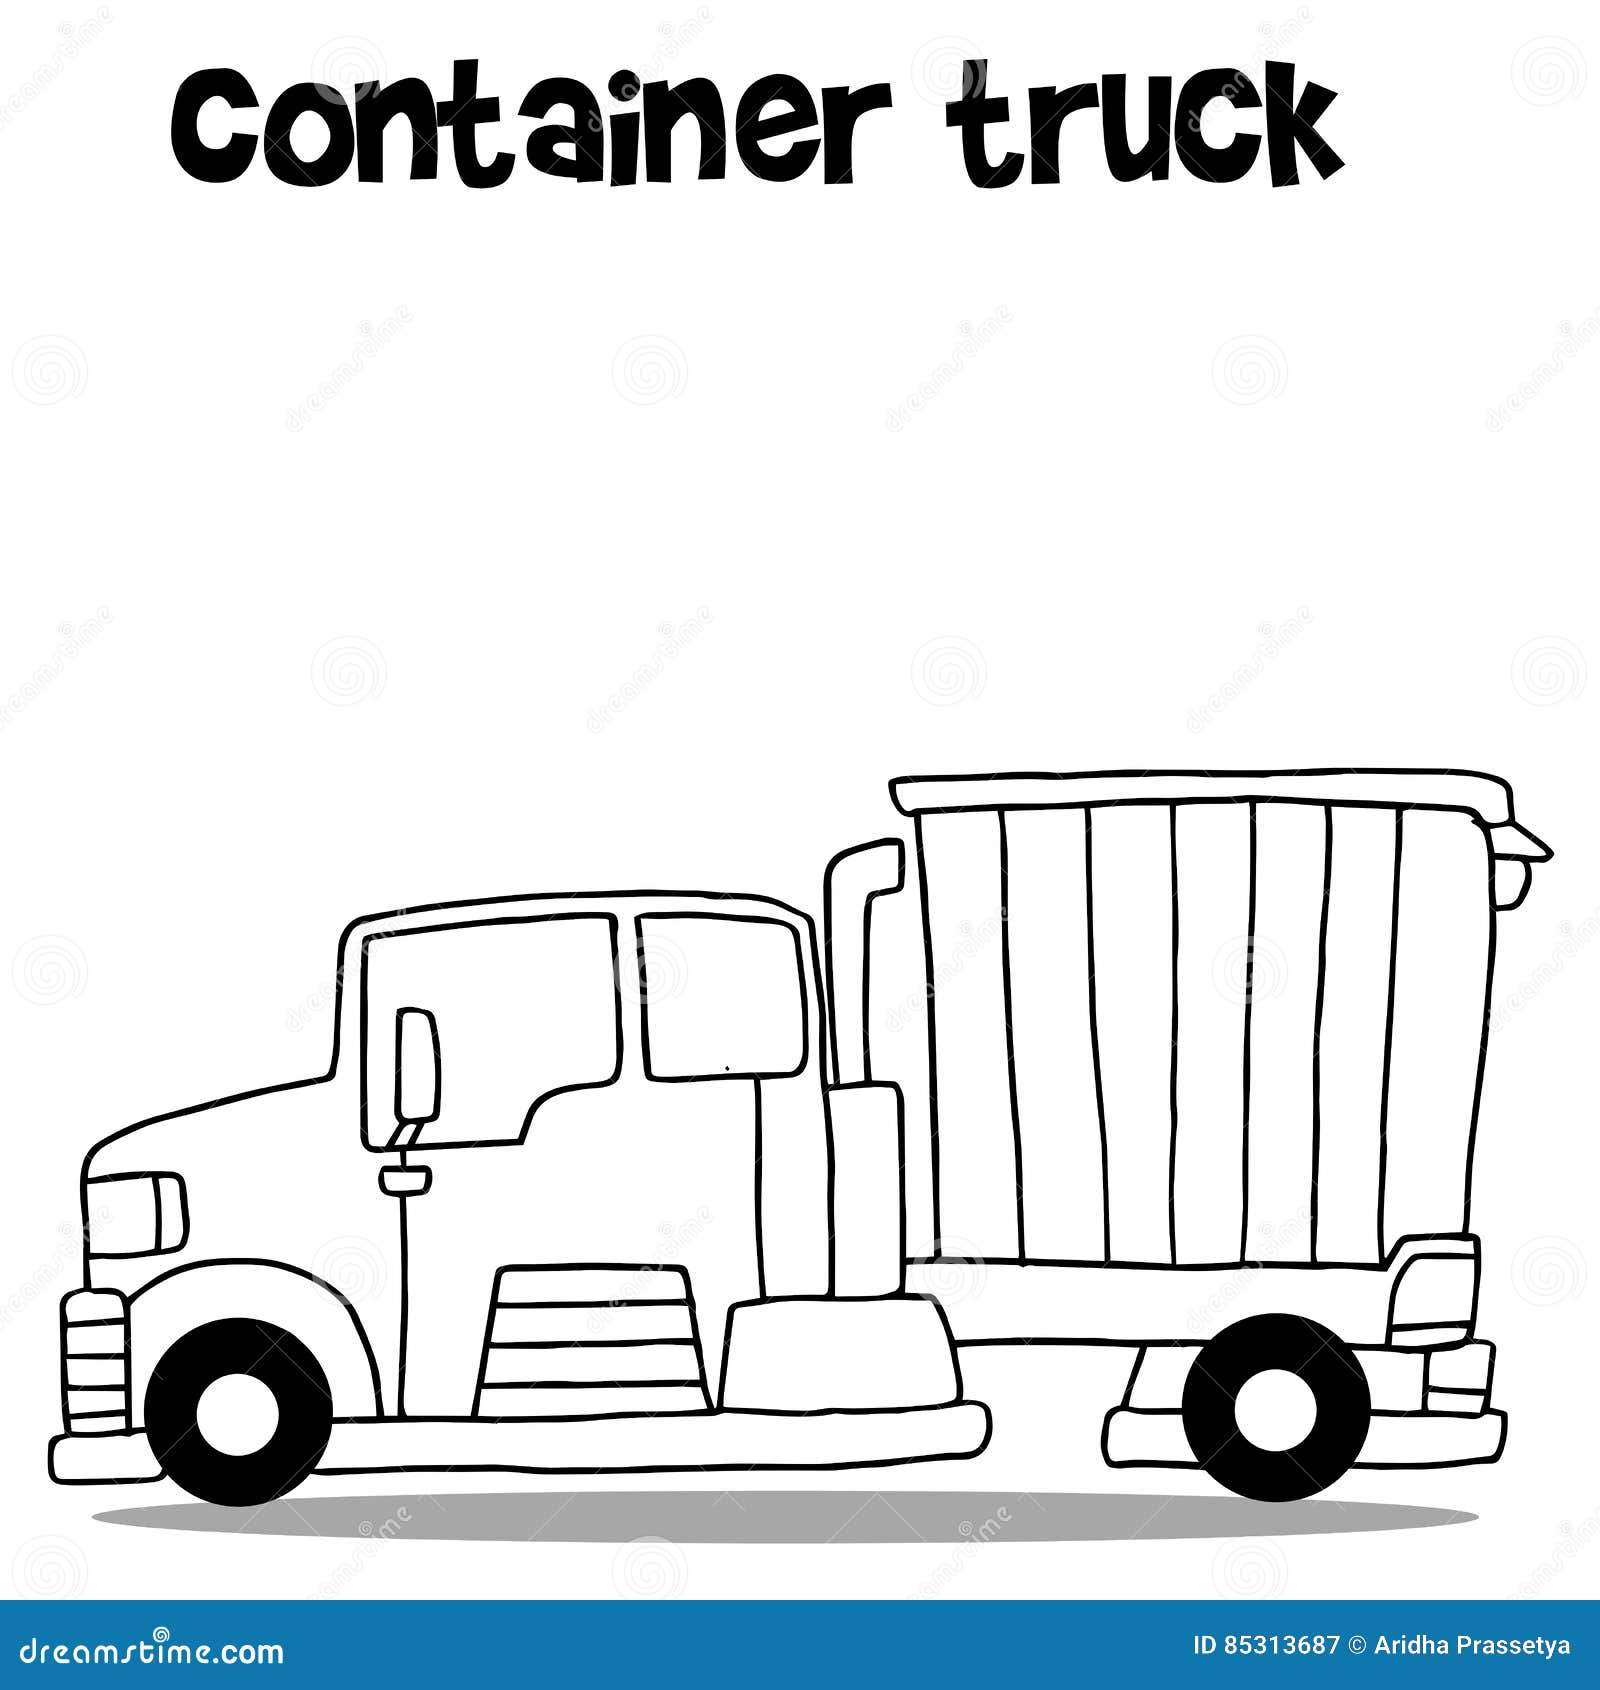 Transportation of Container Truck Cartoon Stock Vector - Illustration of  tank, side: 85313687